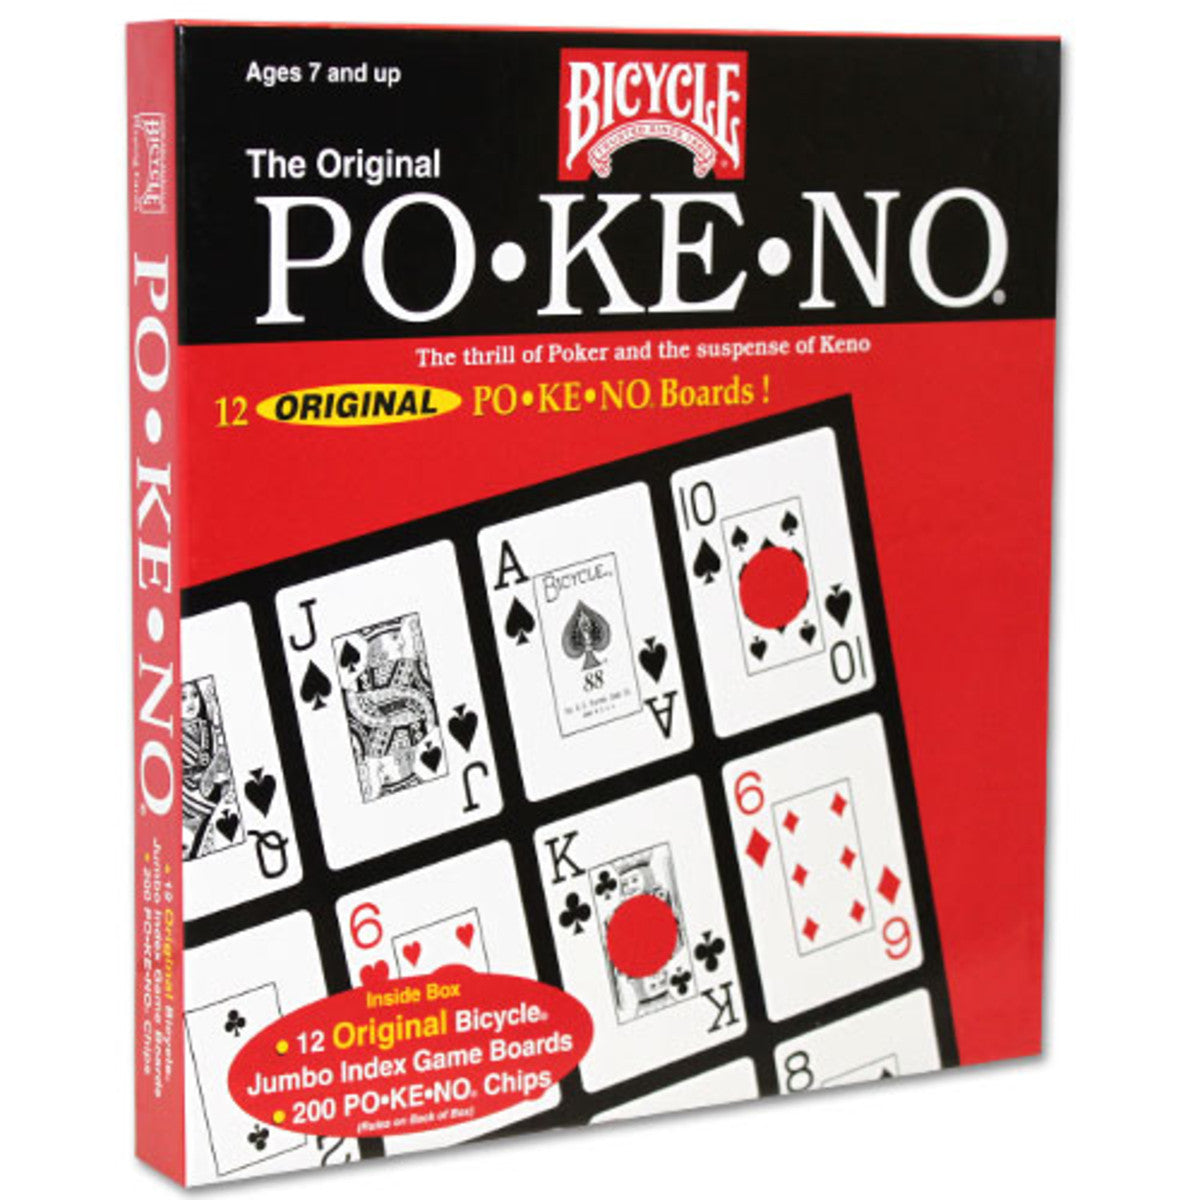 The Original Pokeno Game